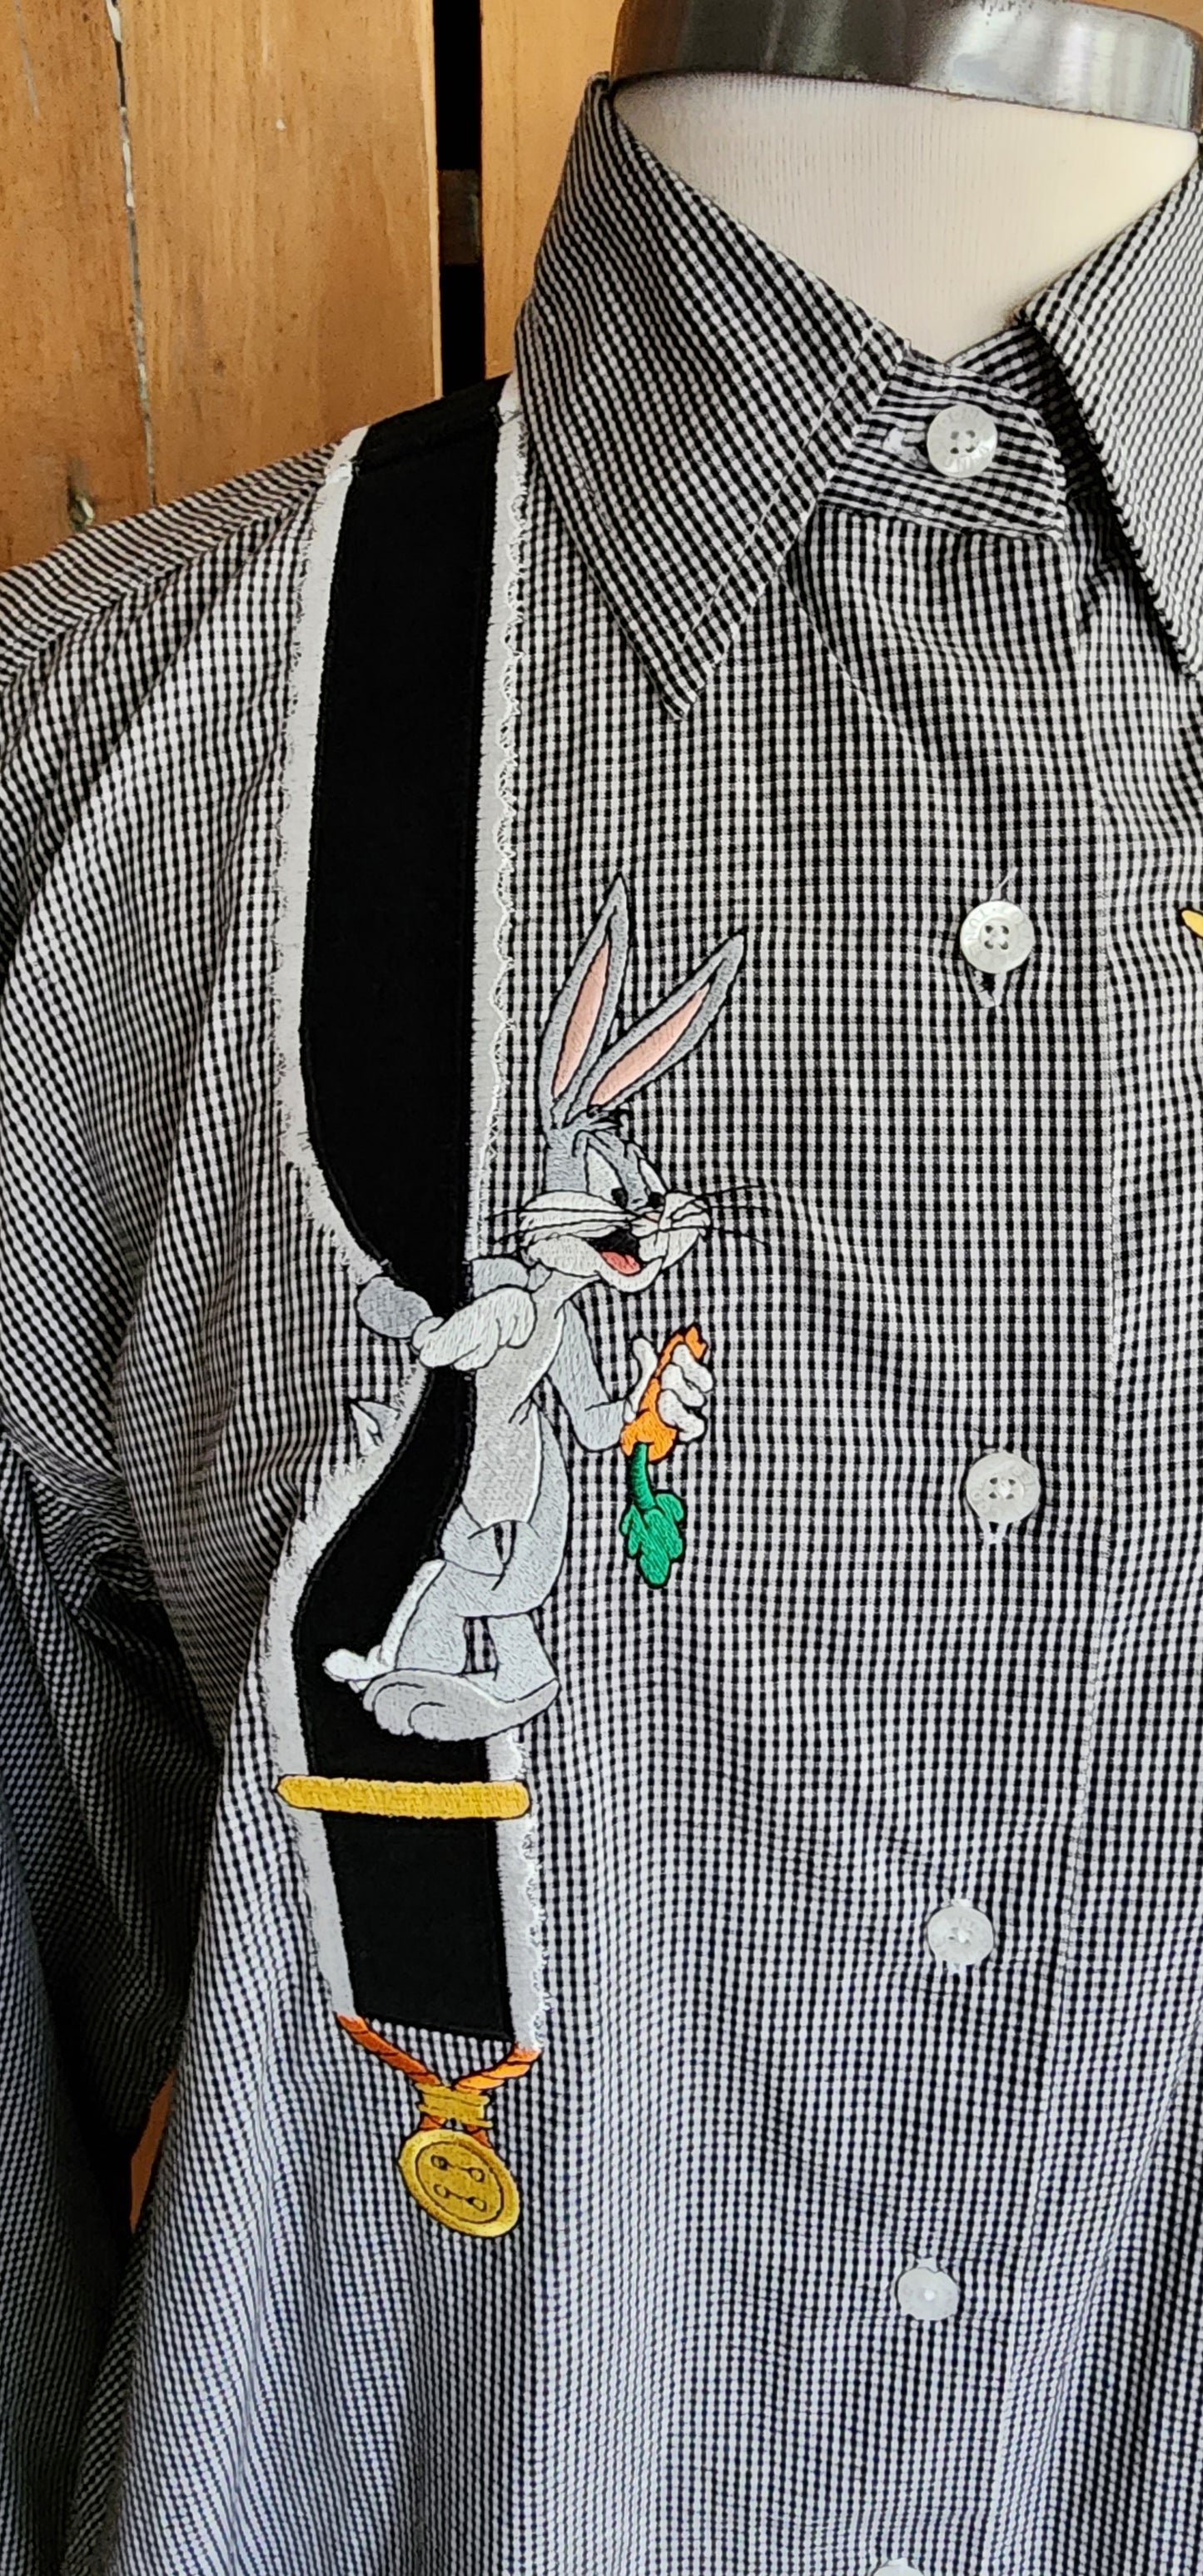 90s Warner Bros Shirt Button Down Checked Print Bugs Bunny Donald Duck